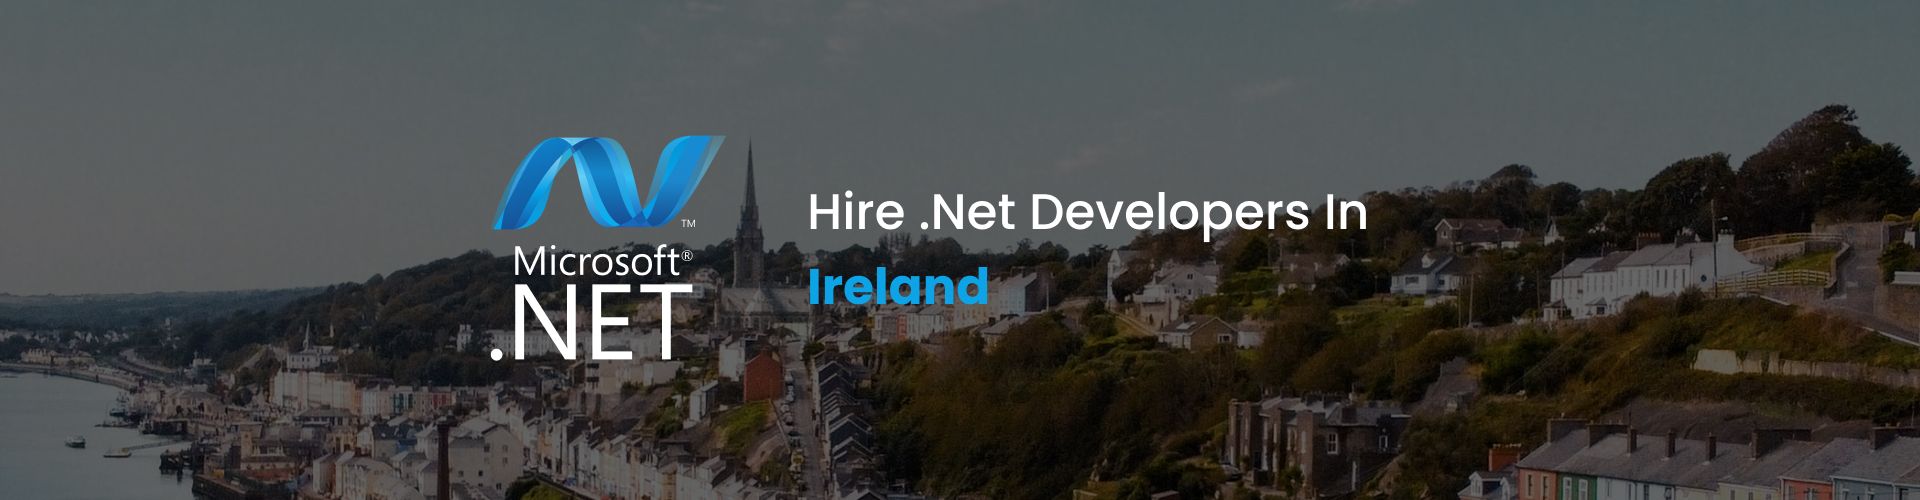 hire .net developers in ireland